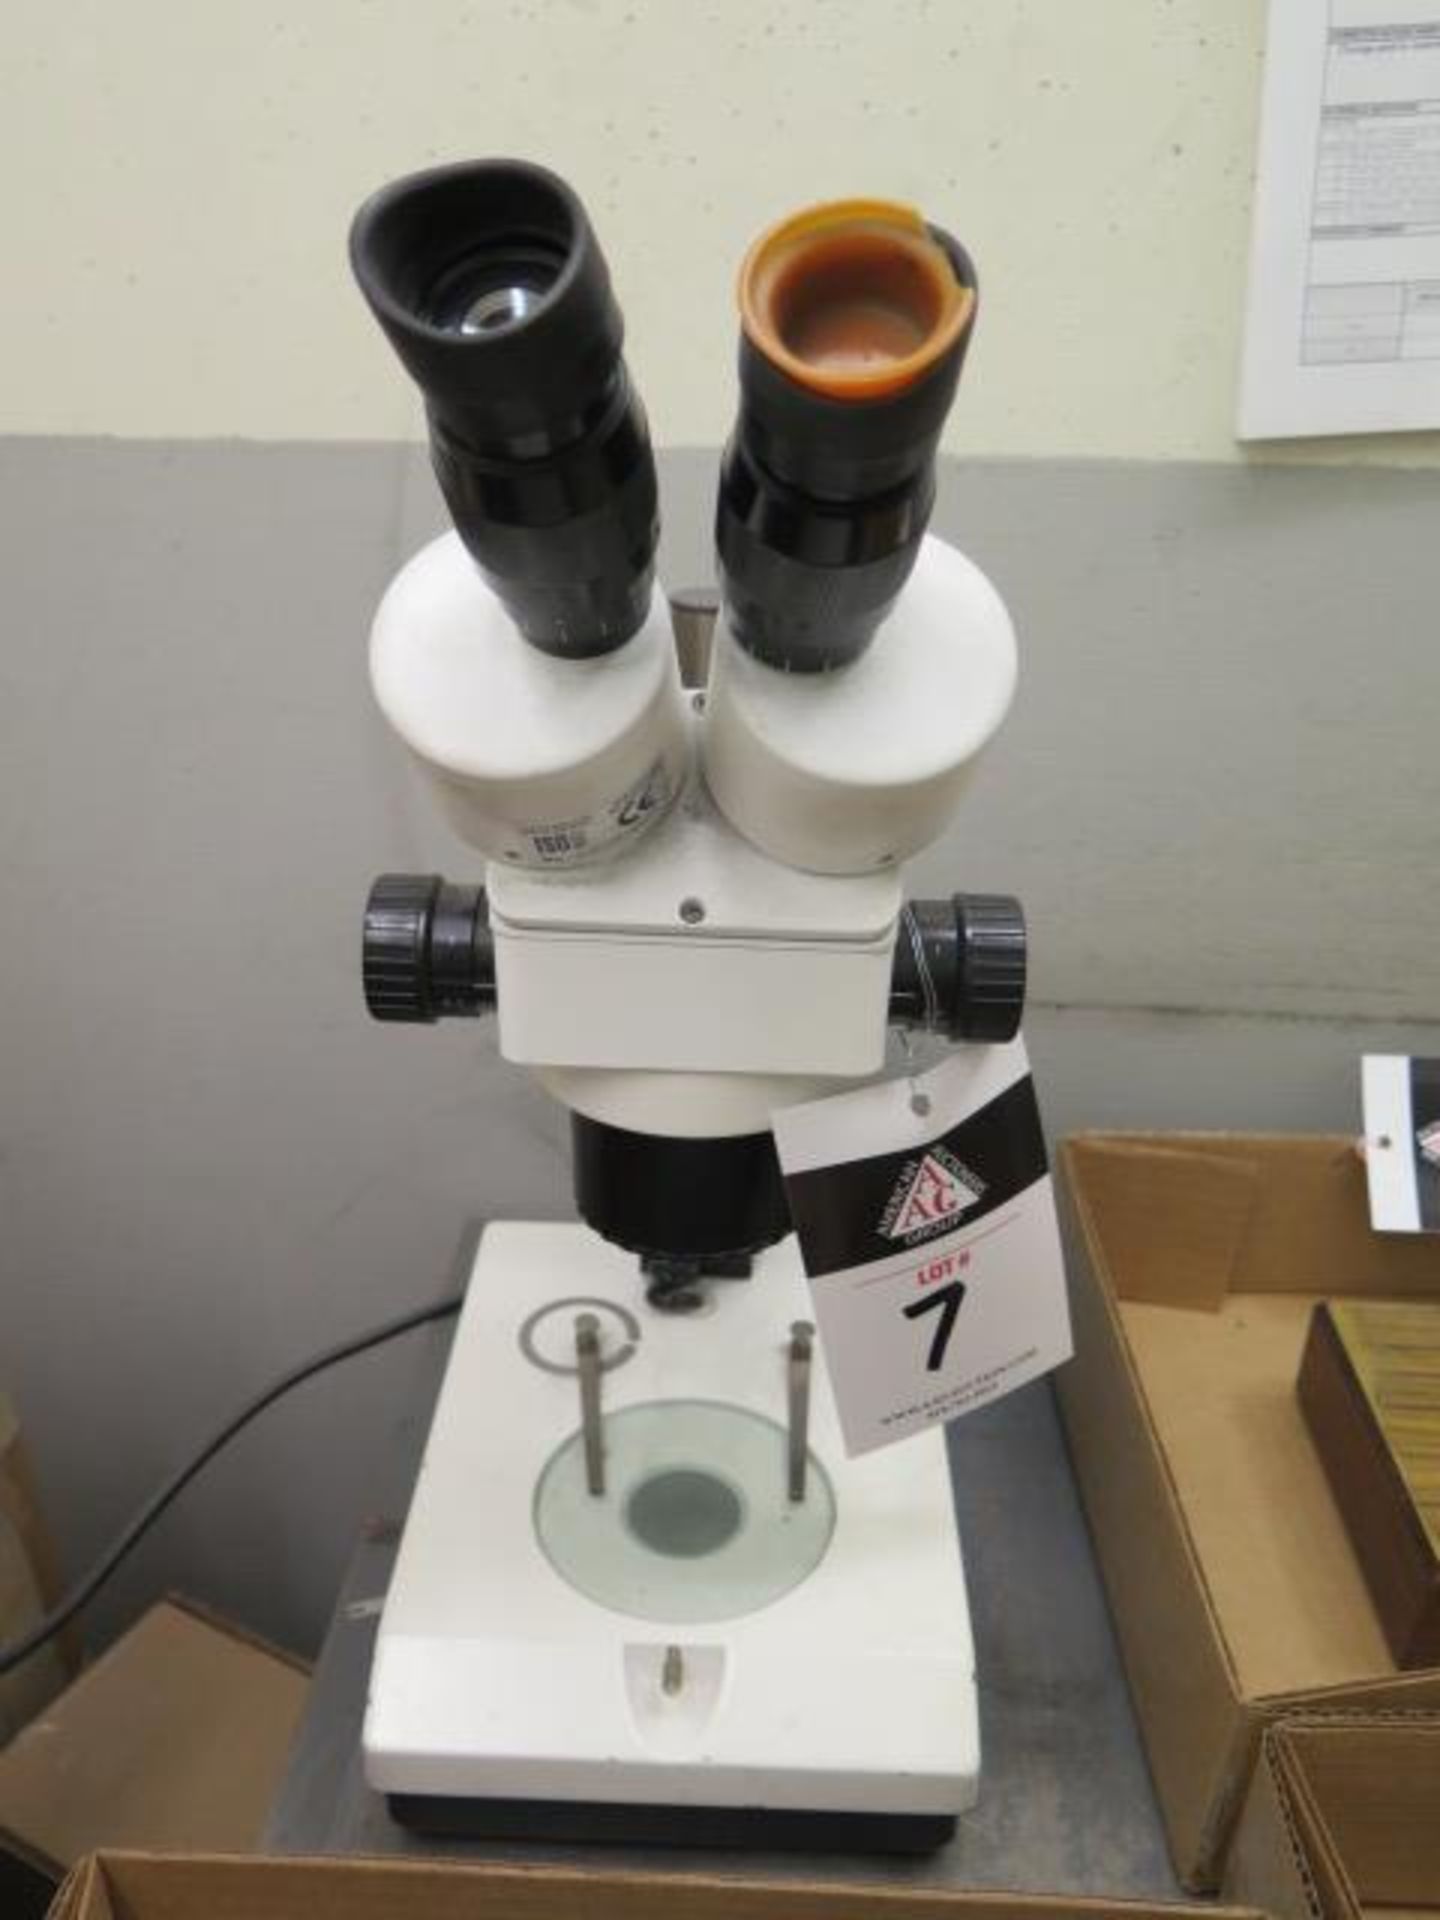 XTS Srtereo Microscope (SOLD AS-IS - NO WARRANTY)